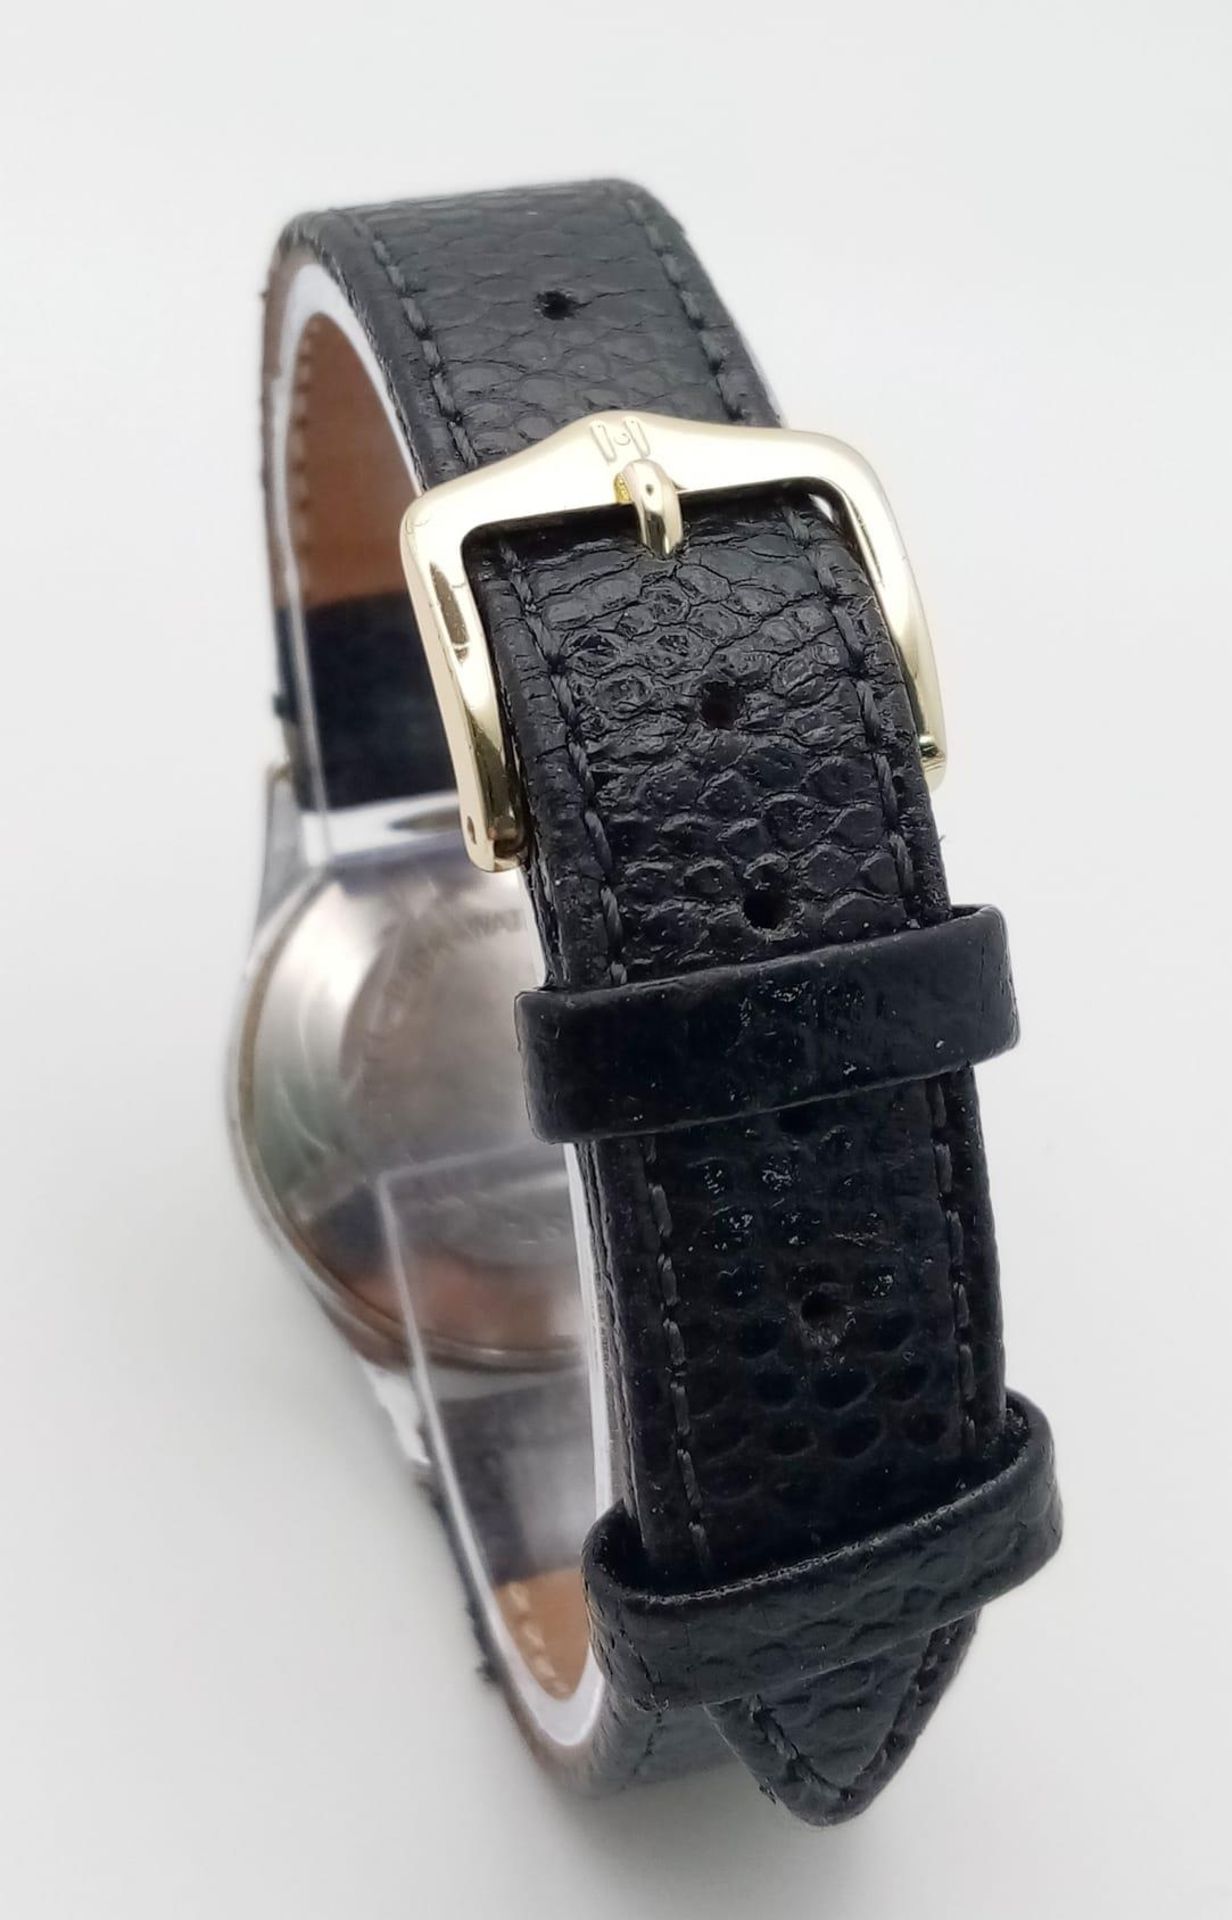 A Vintage Zenith Ladies Watch. Brown leather strap. Stainless steel case - 28mm. Silver tone dial - Bild 7 aus 8